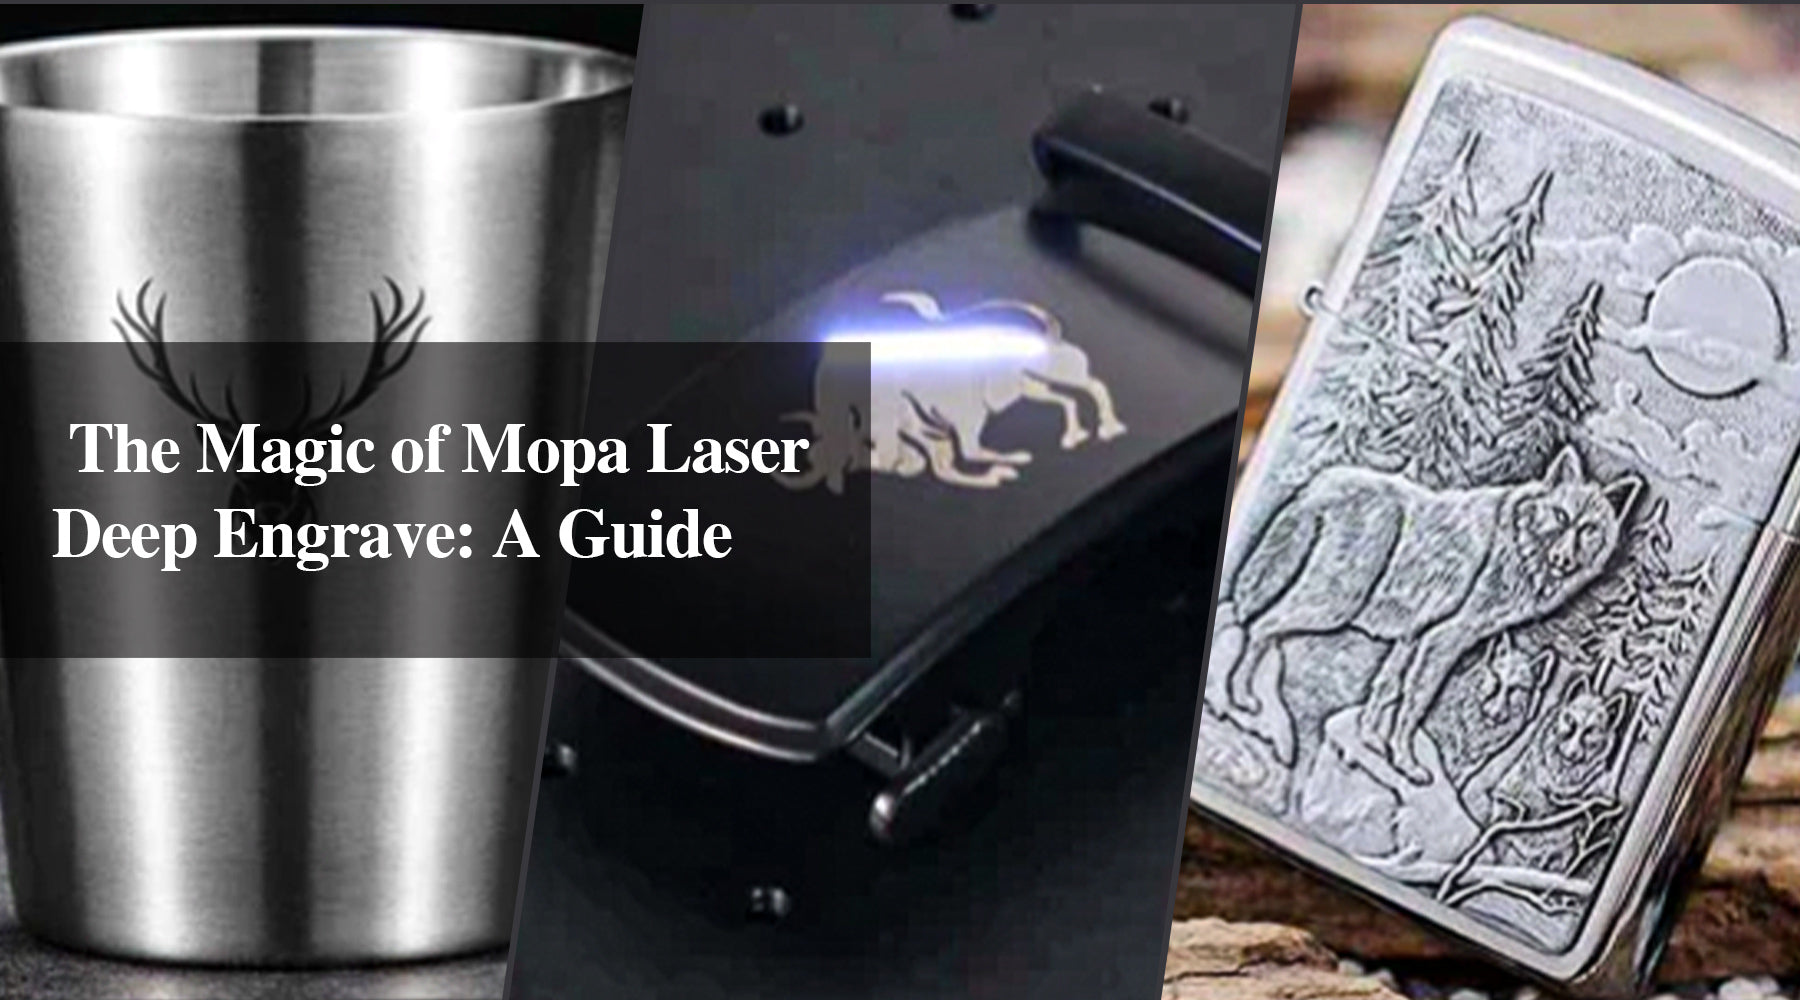 The Magic of Mopa Laser Deep Engrave: A Guide